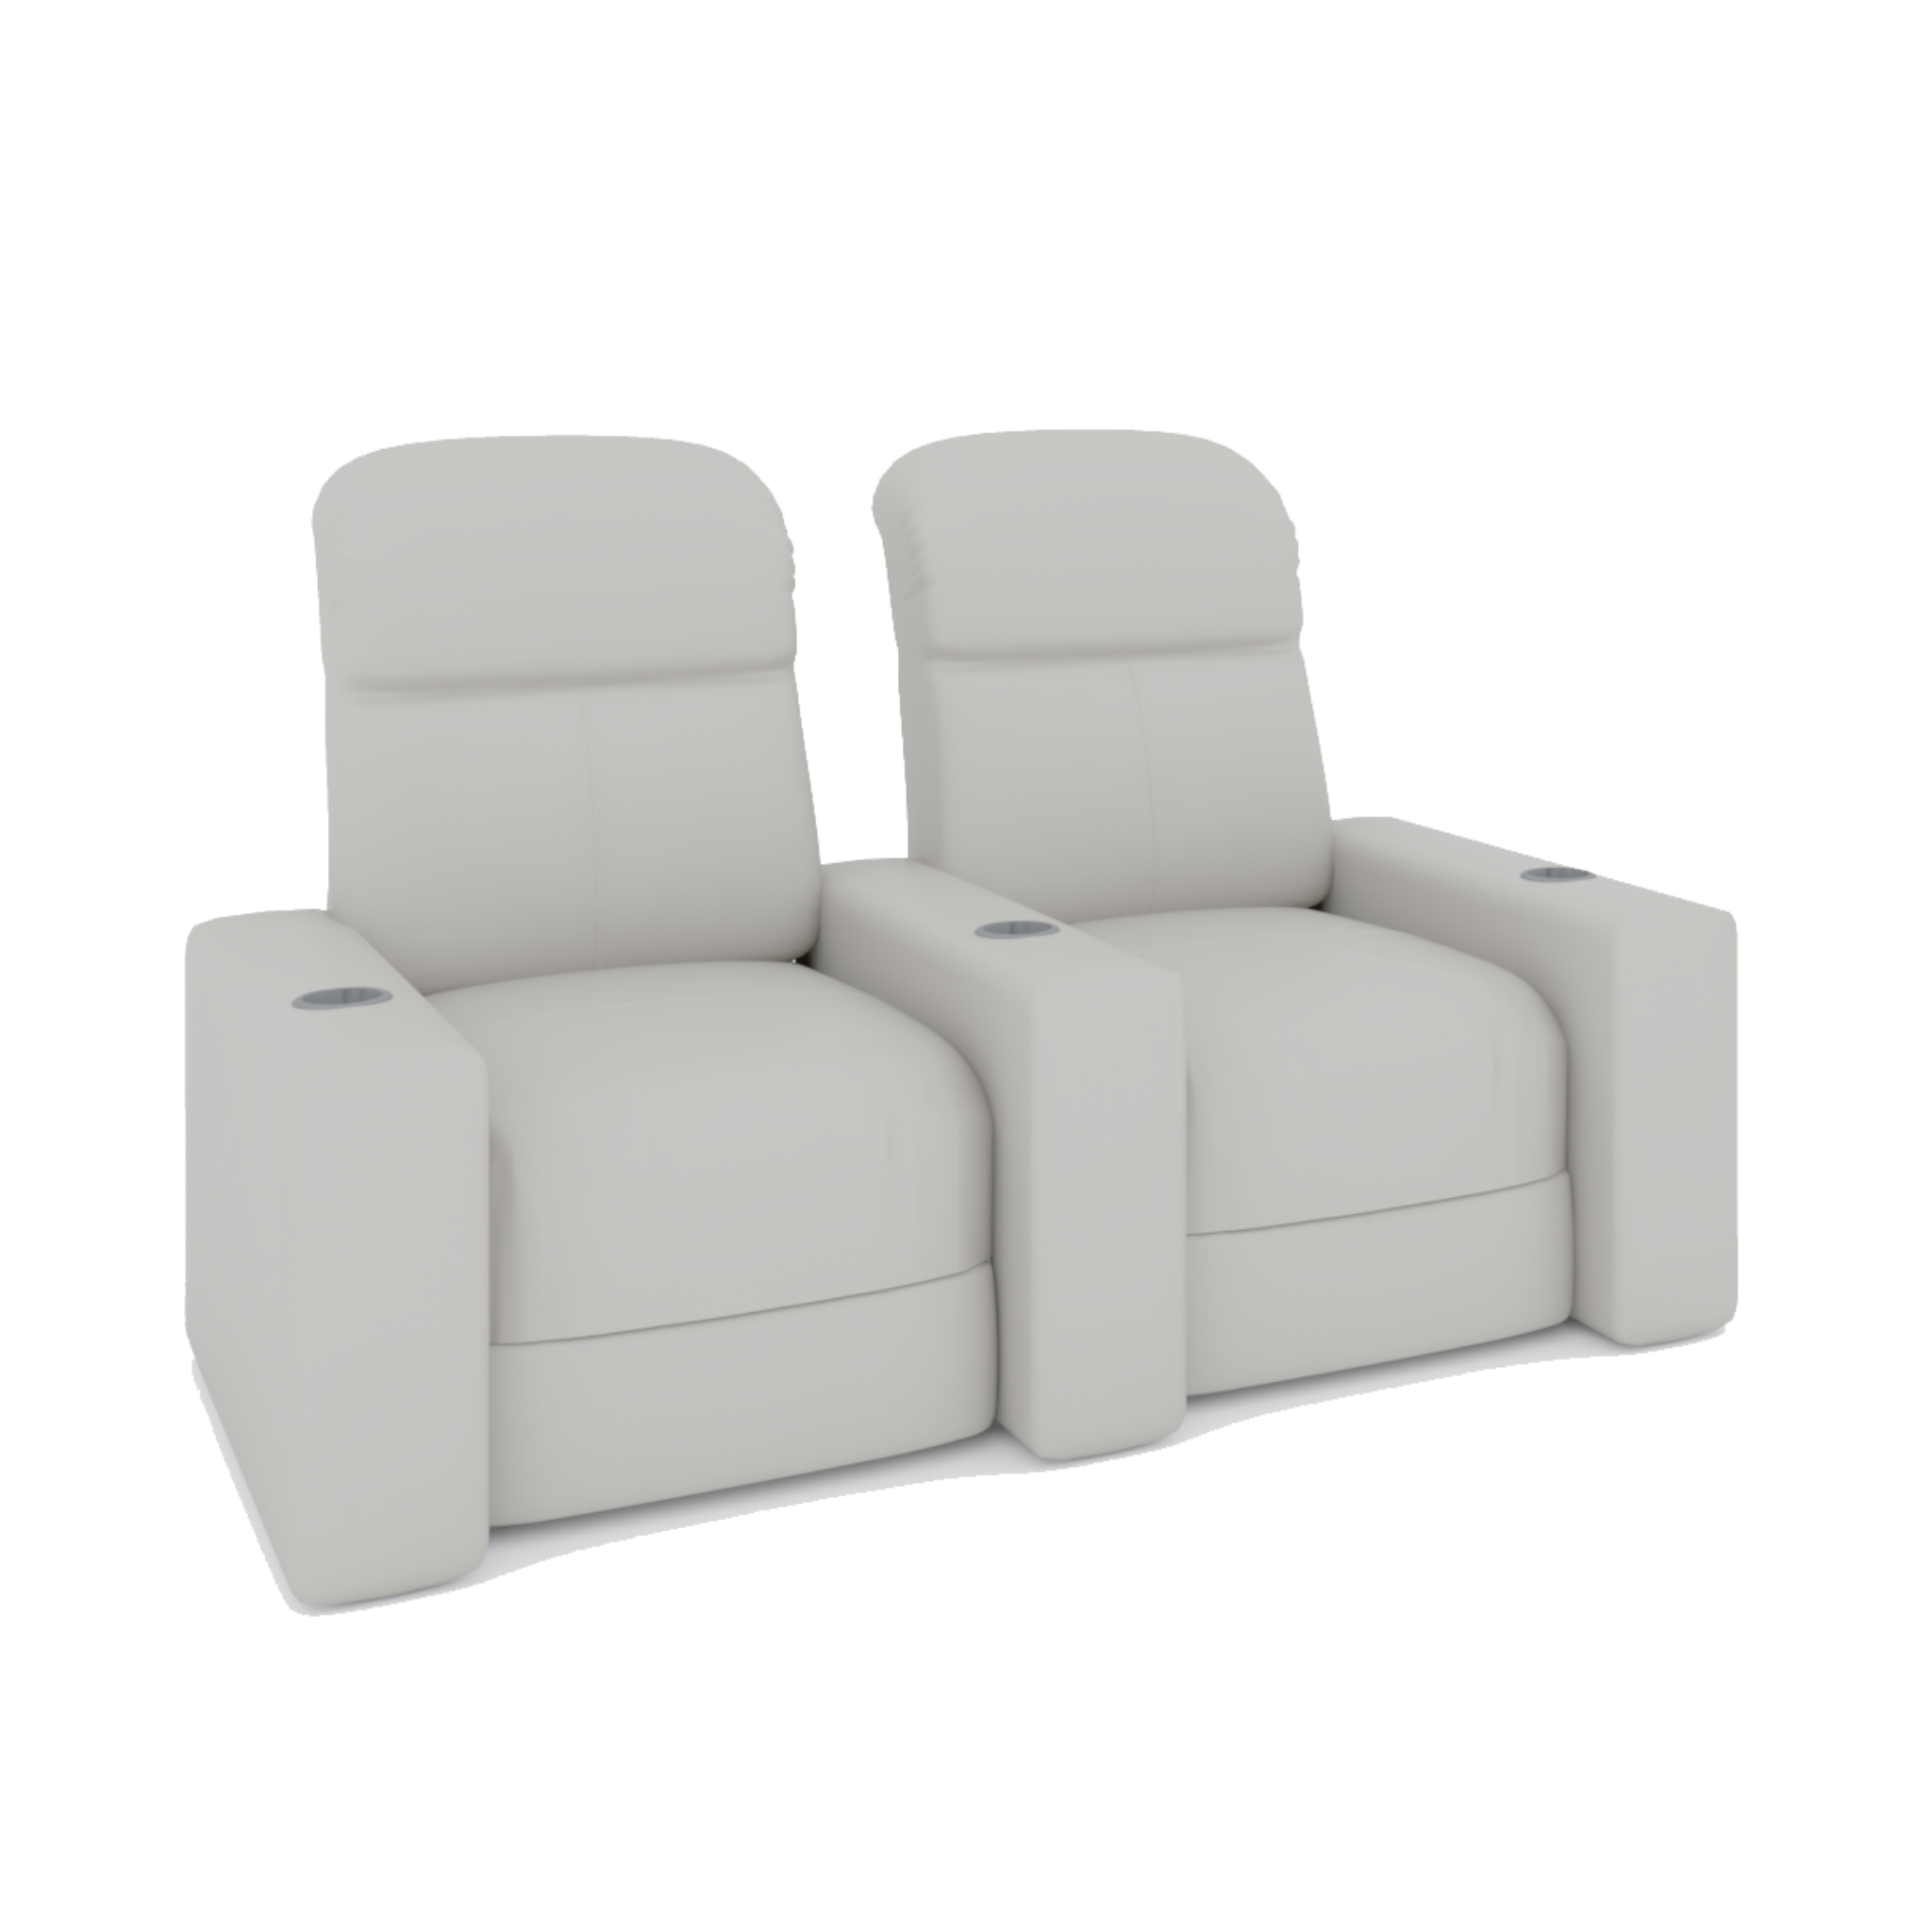 Cinema 2 seater Recliner Sofa